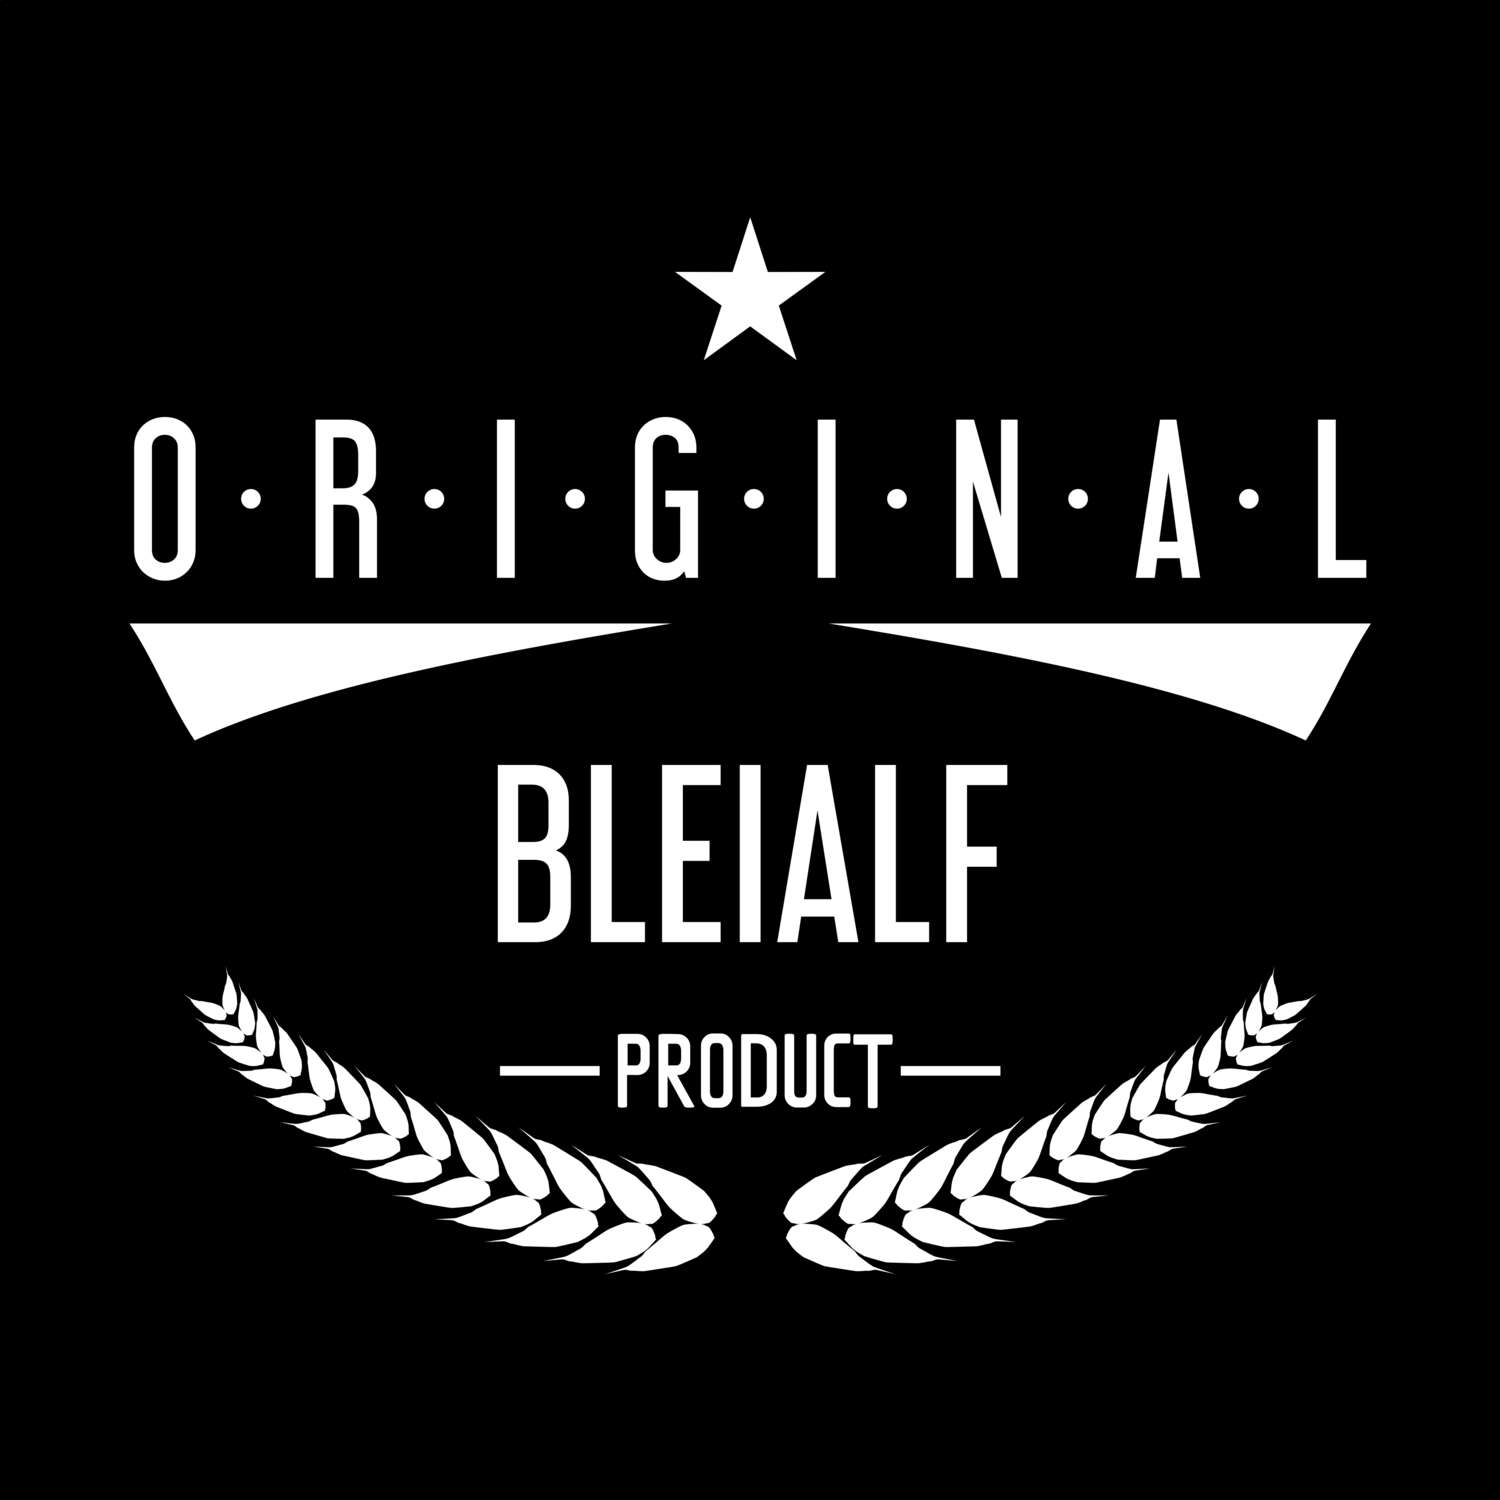 Bleialf T-Shirt »Original Product«